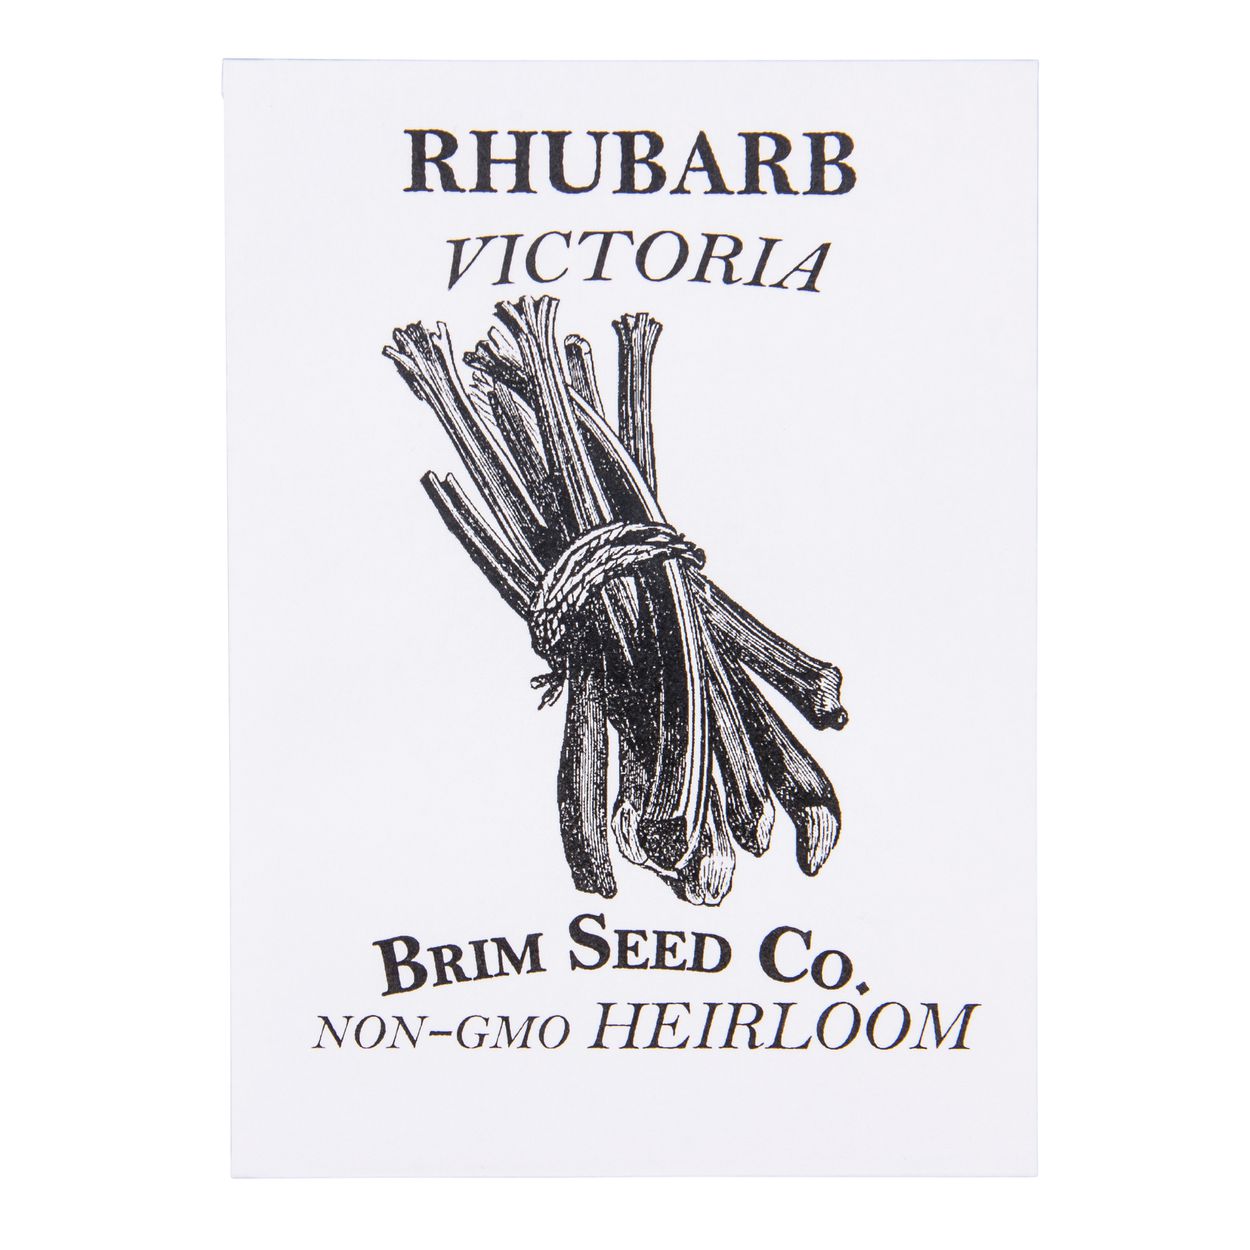 Brim Seed Co. - Victoria Rhubarb Heirloom Seed